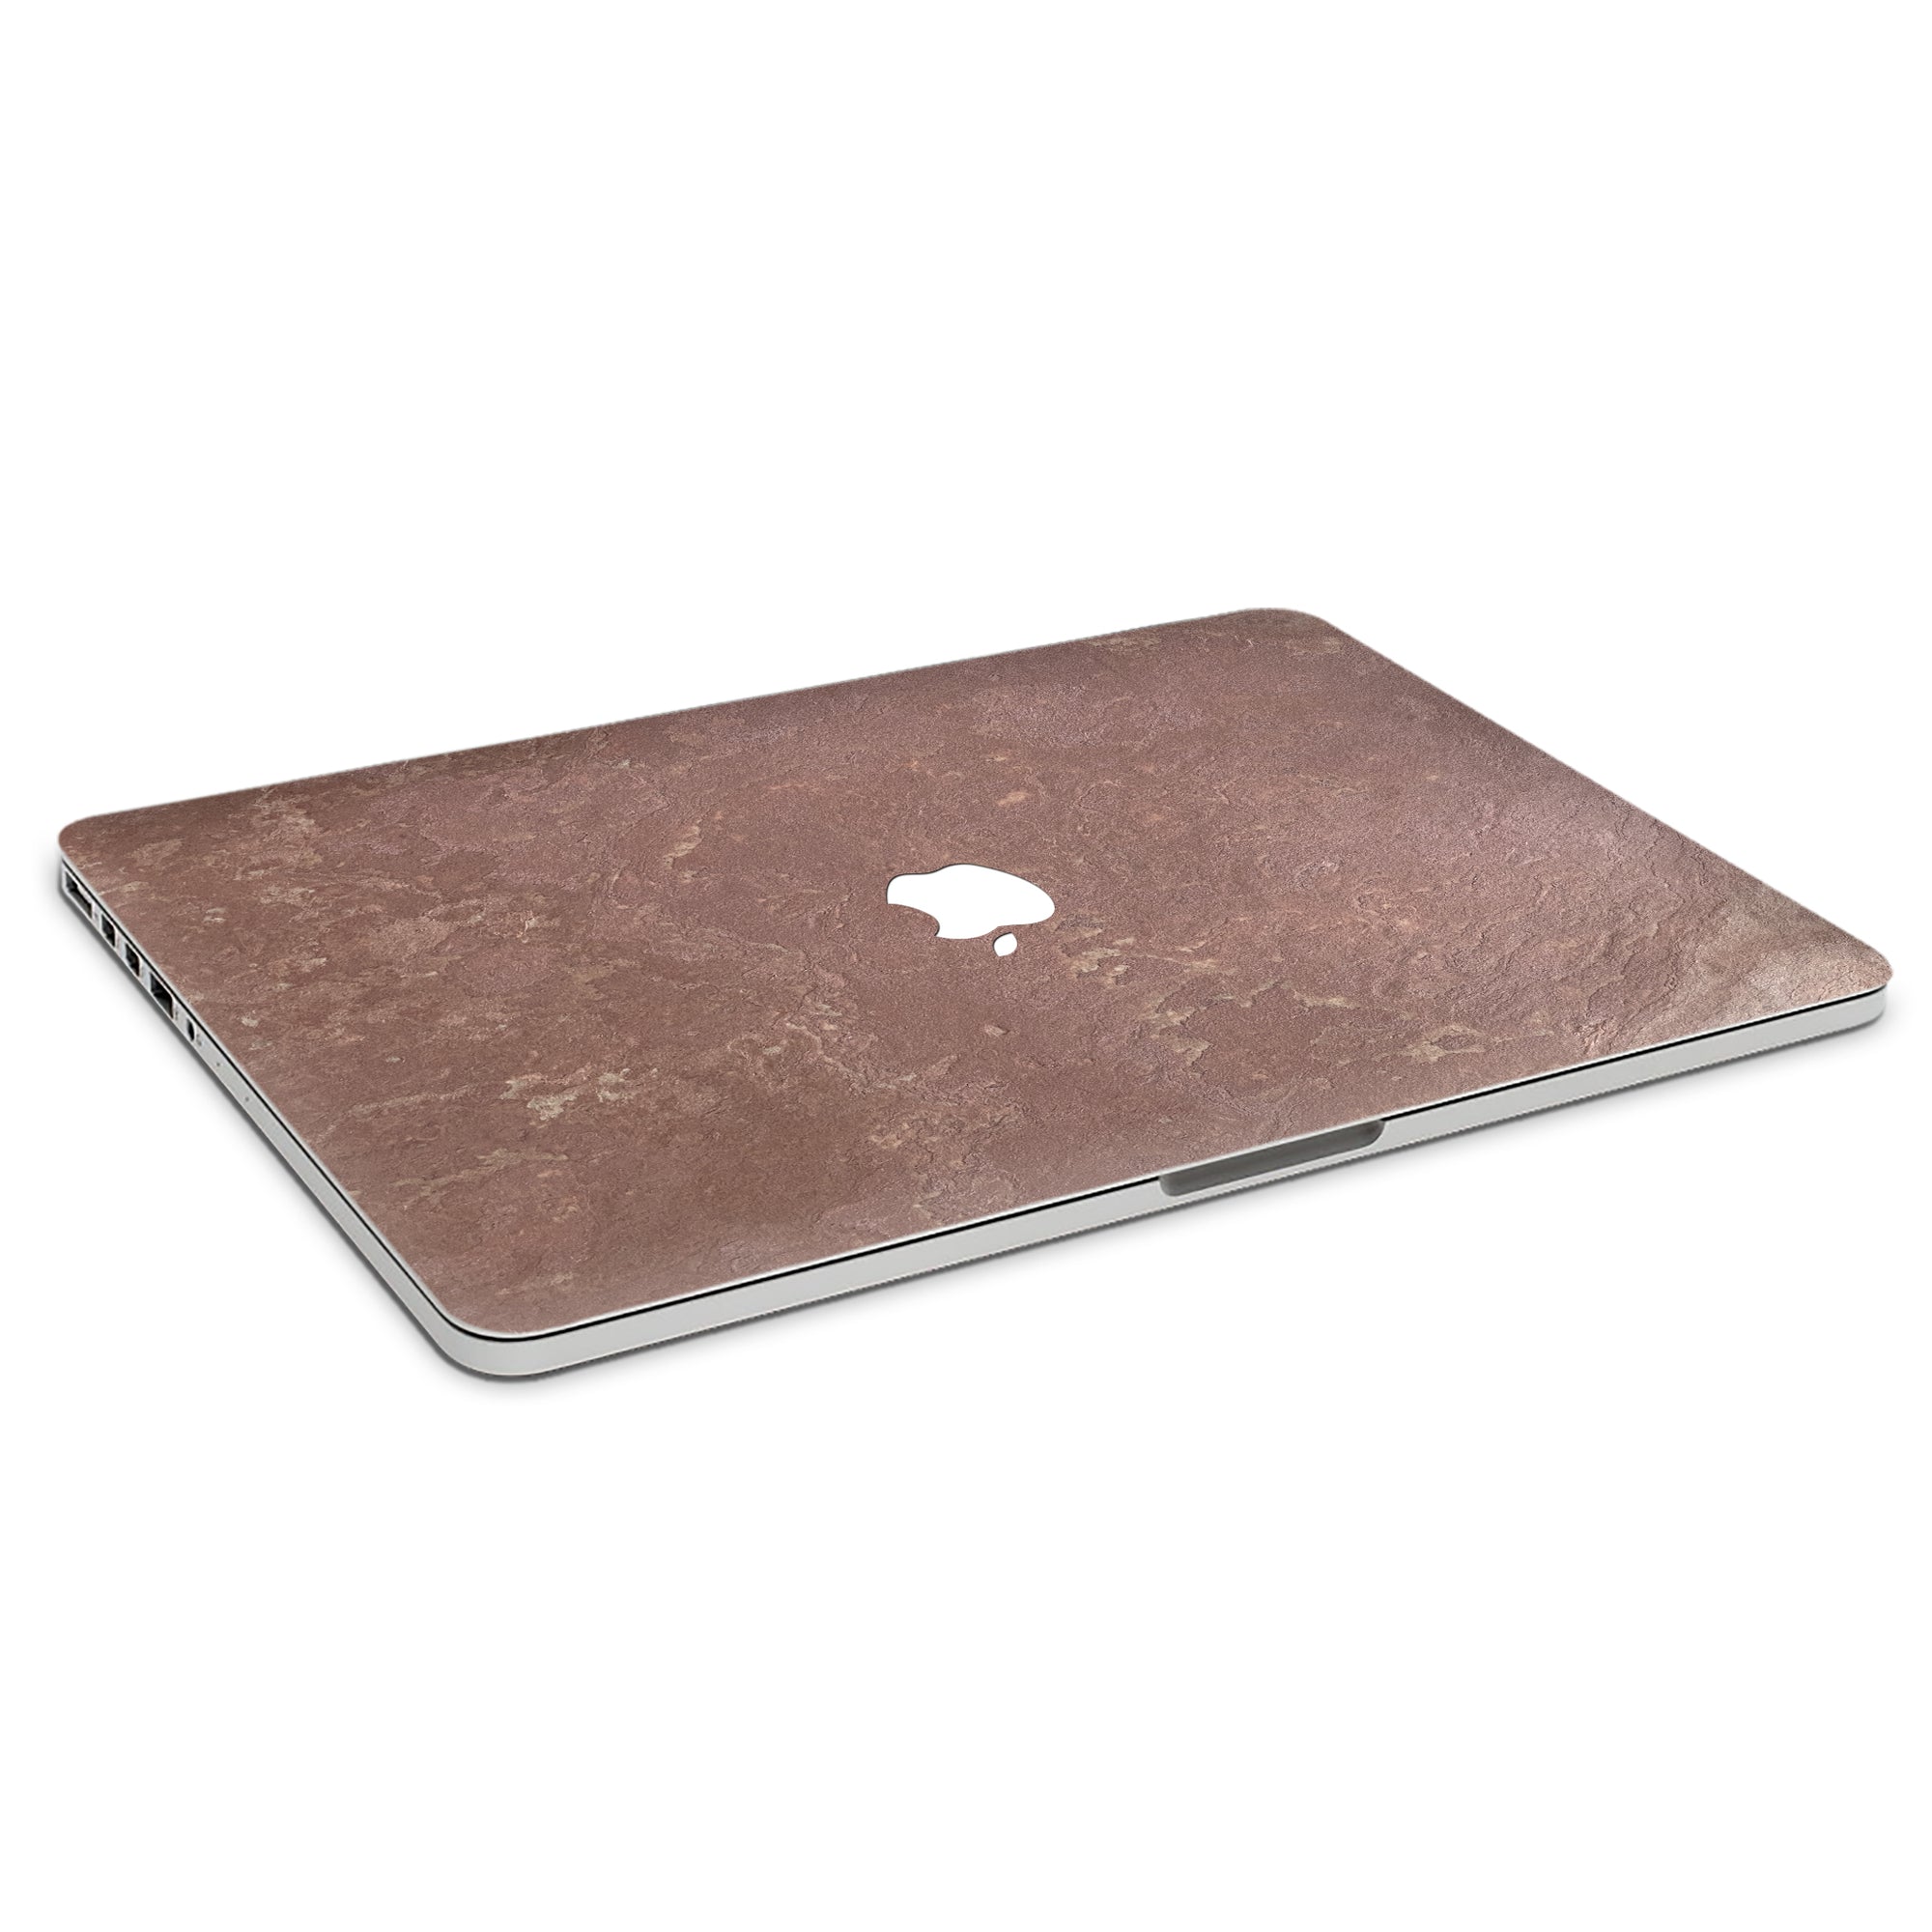 macbook pro skins 17 inch